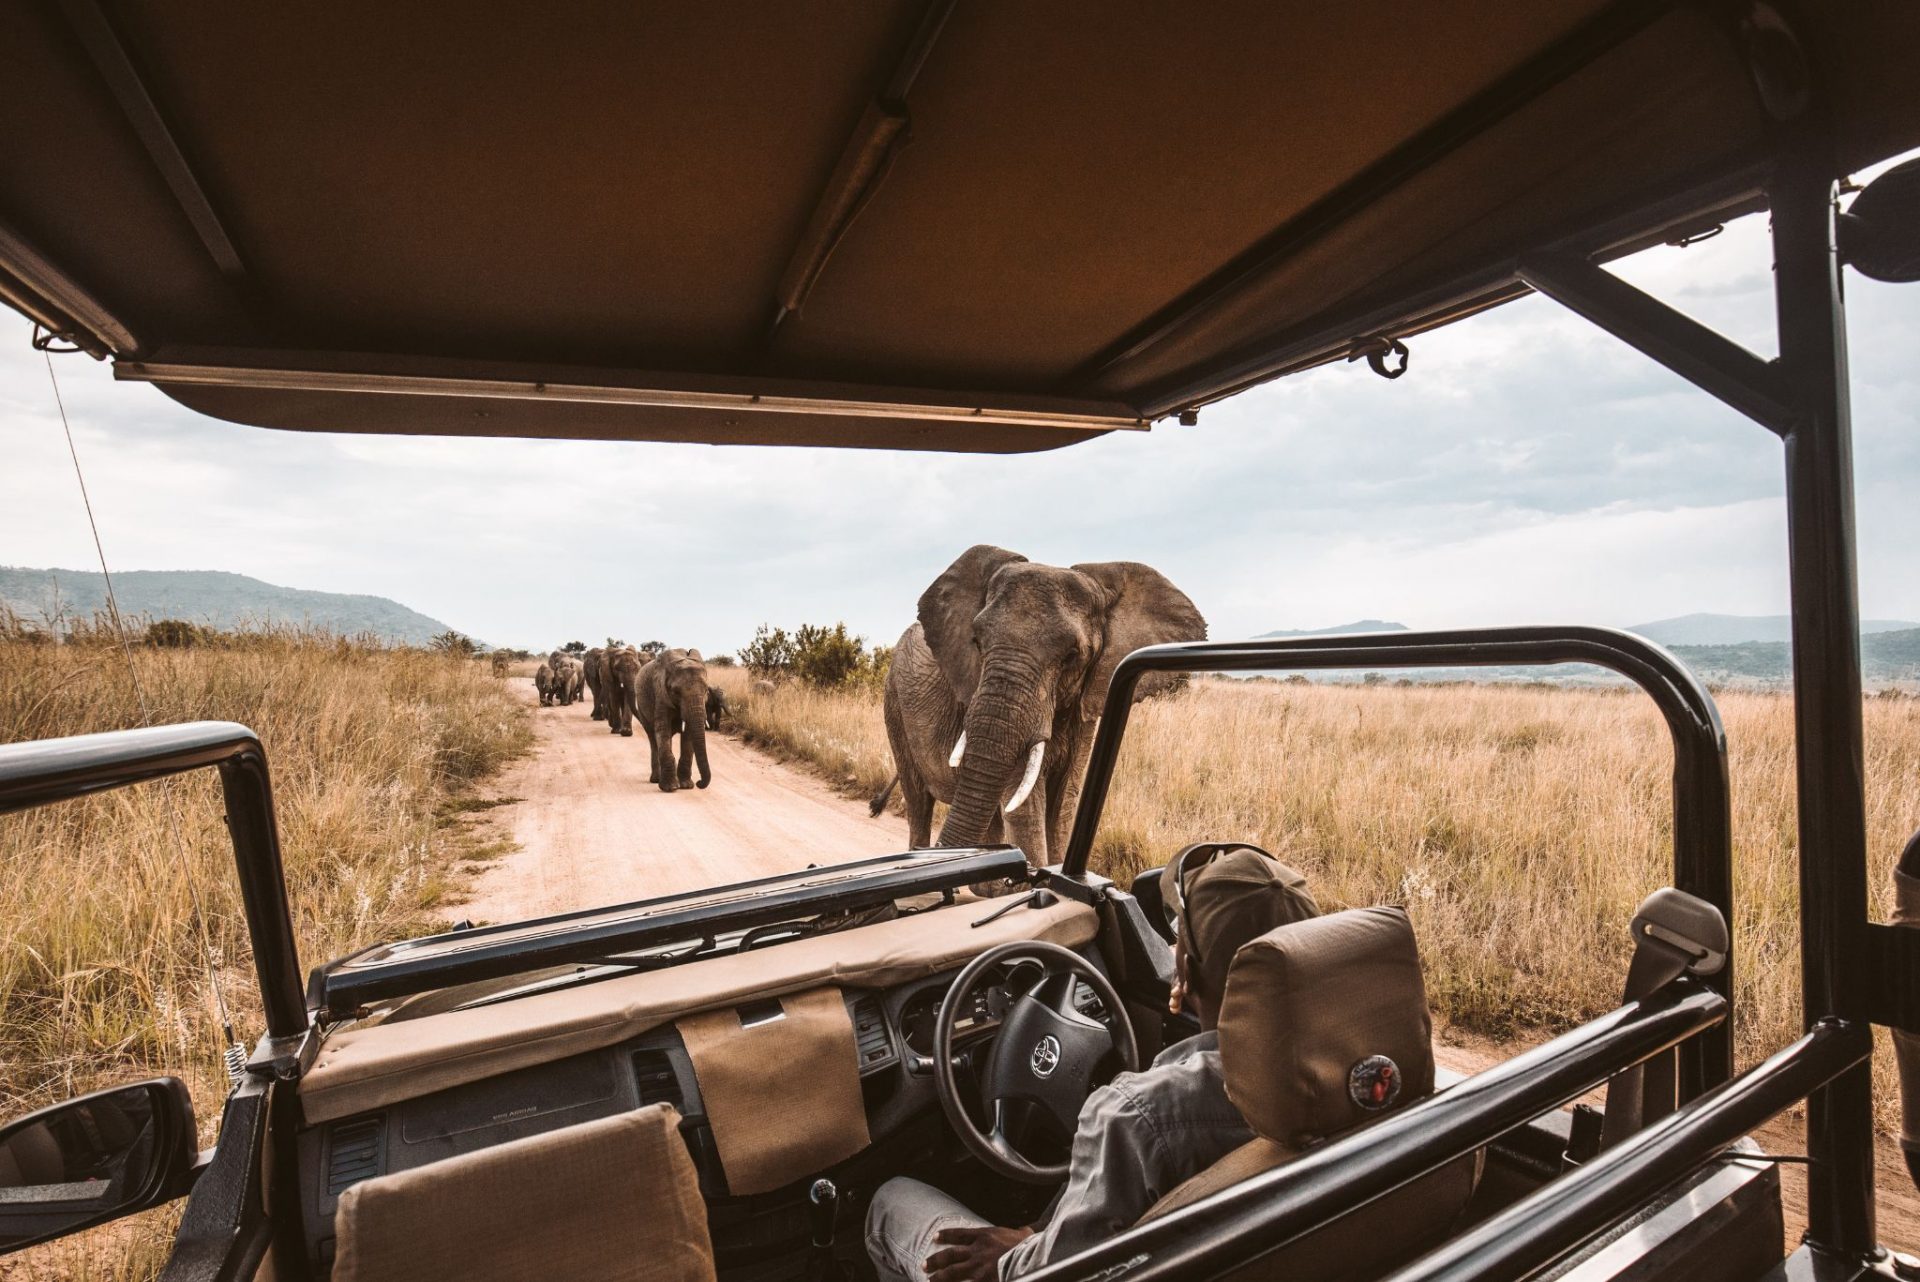 Safaris